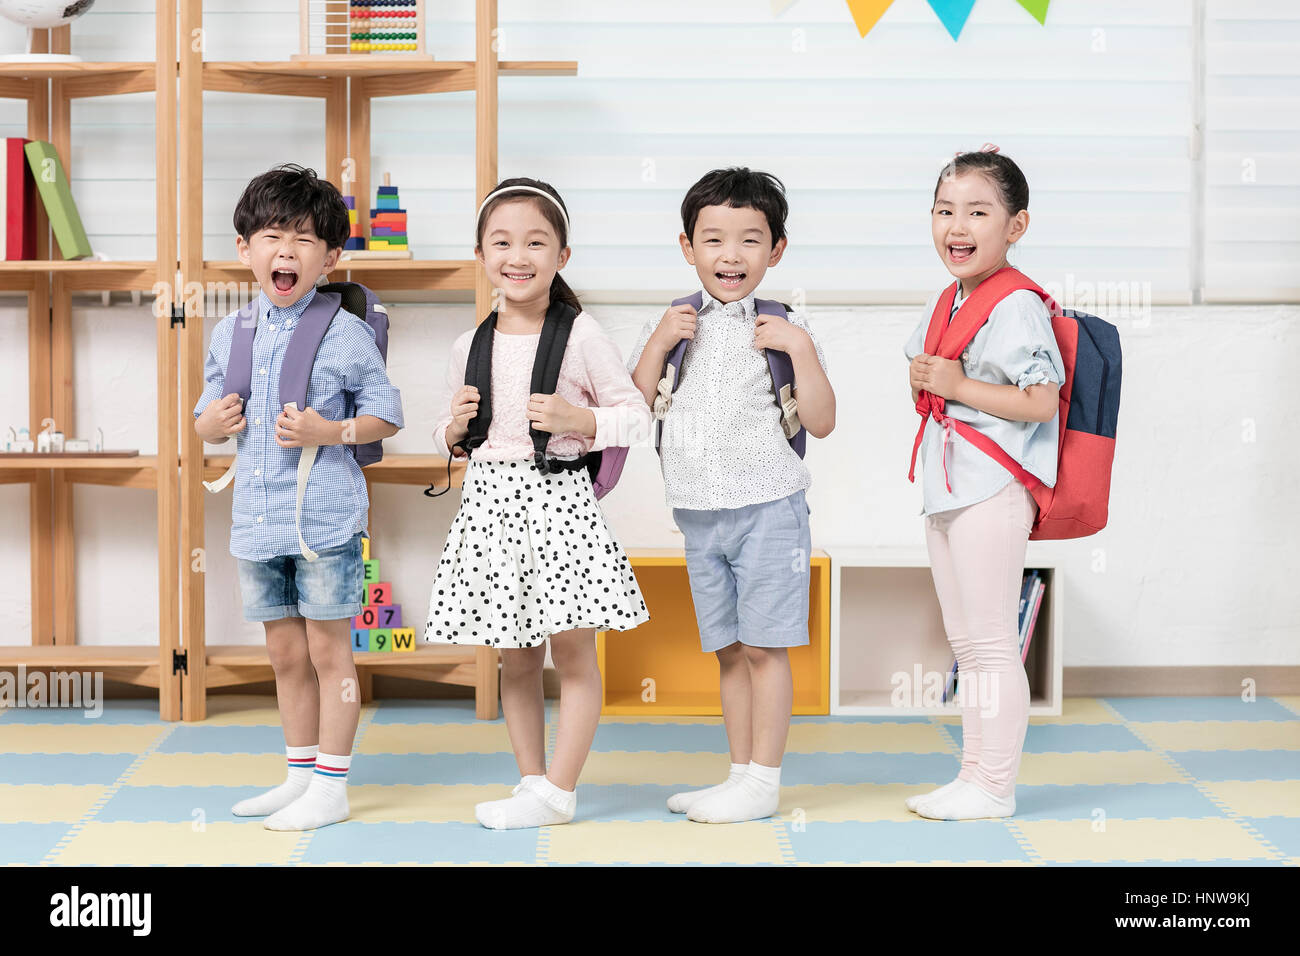 Smiling kindergarten kids with backpacks standing in line Stock Photo